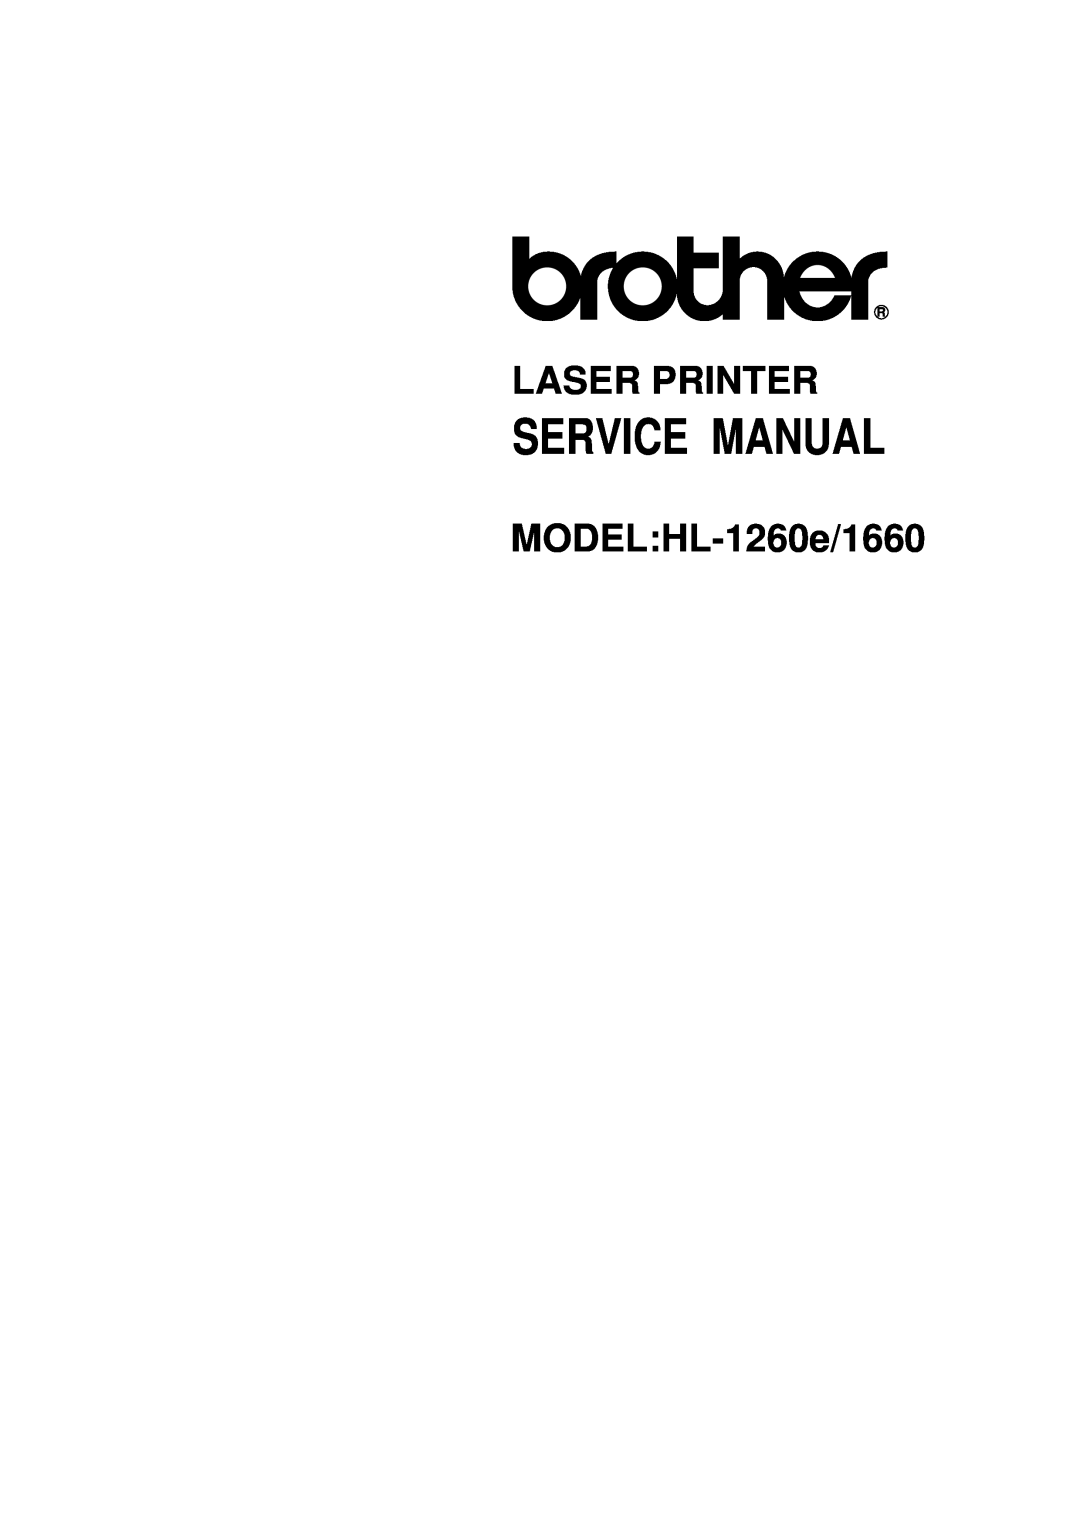 Brother service manual Service Manual, Laser Printer, MODELHL-1260e/1660 